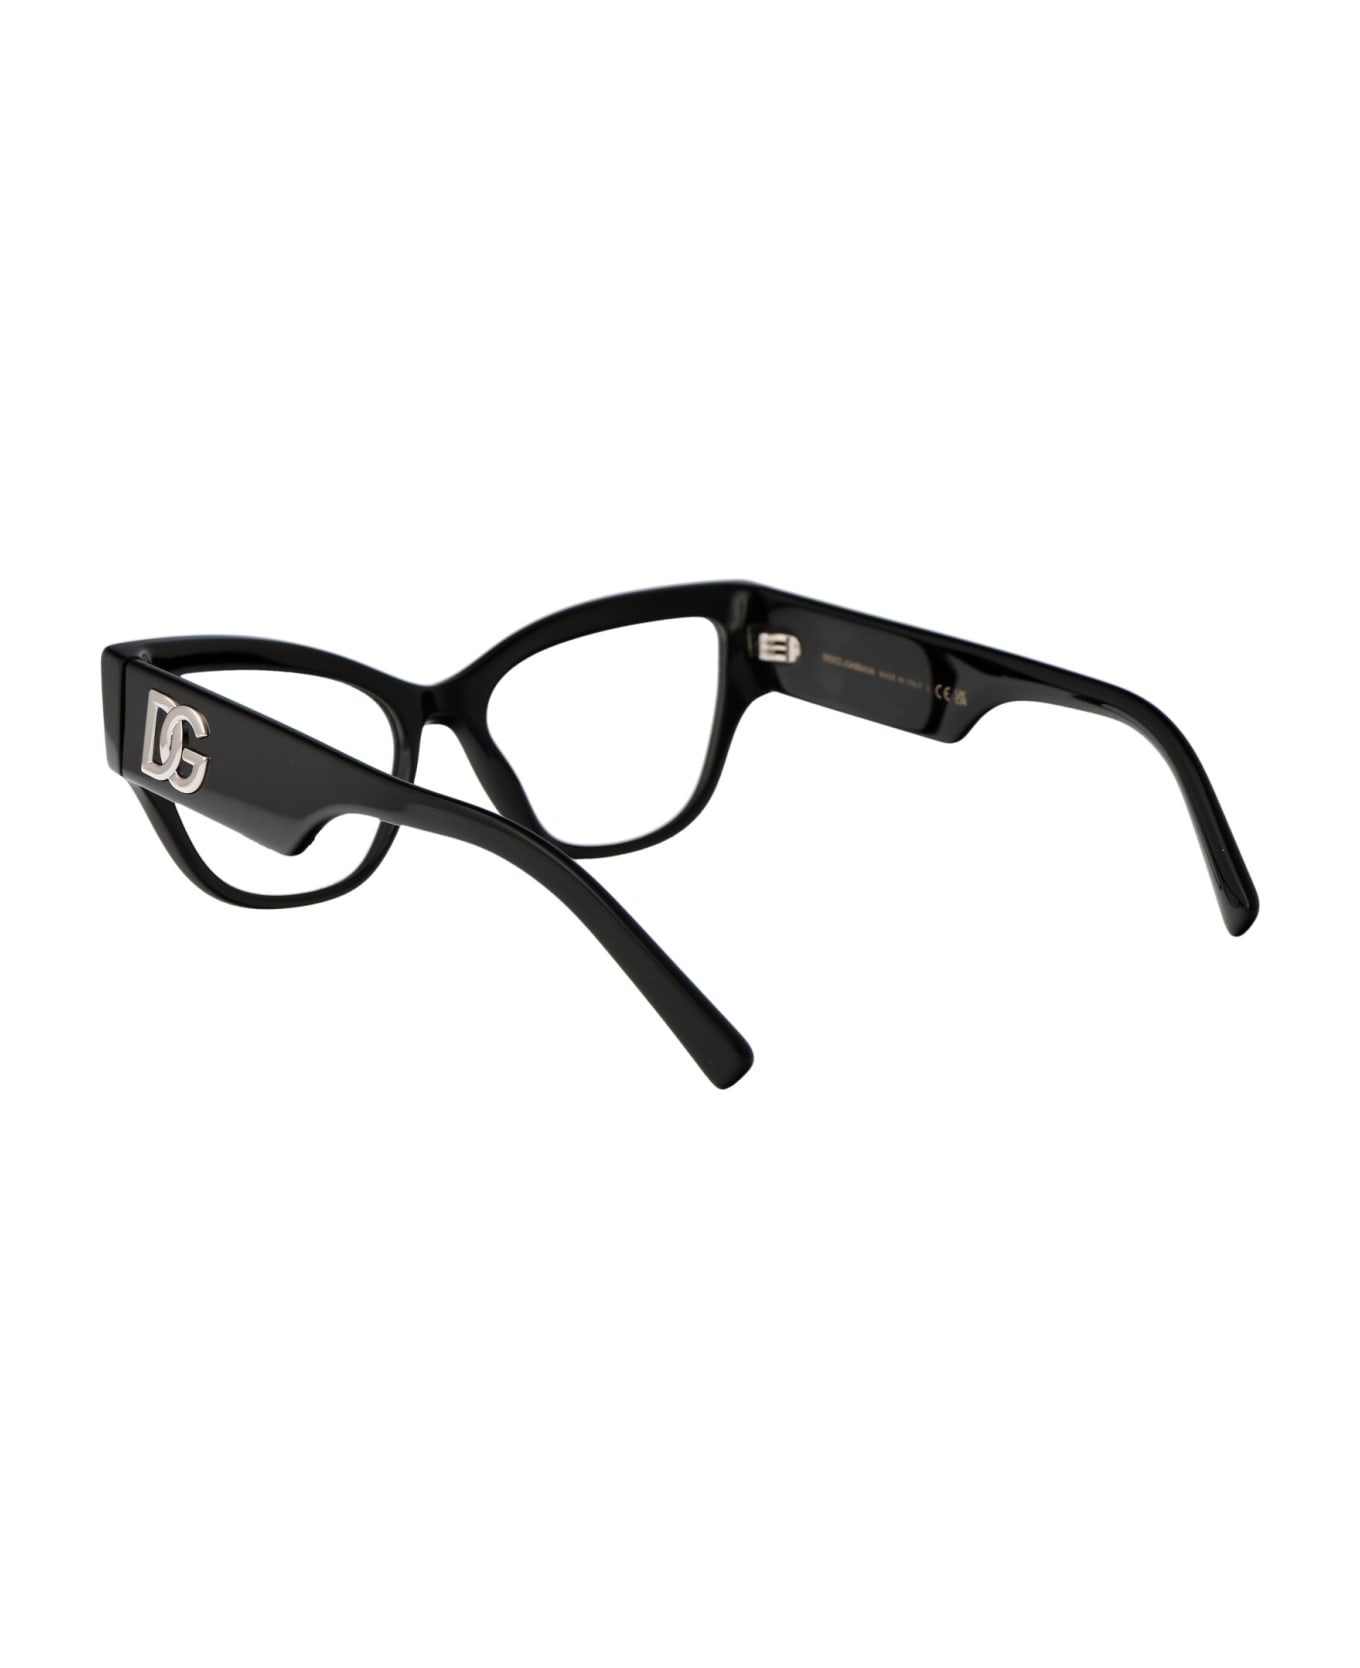 Dolce & Gabbana Eyewear 0dg3378 Glasses - 501 BLACK